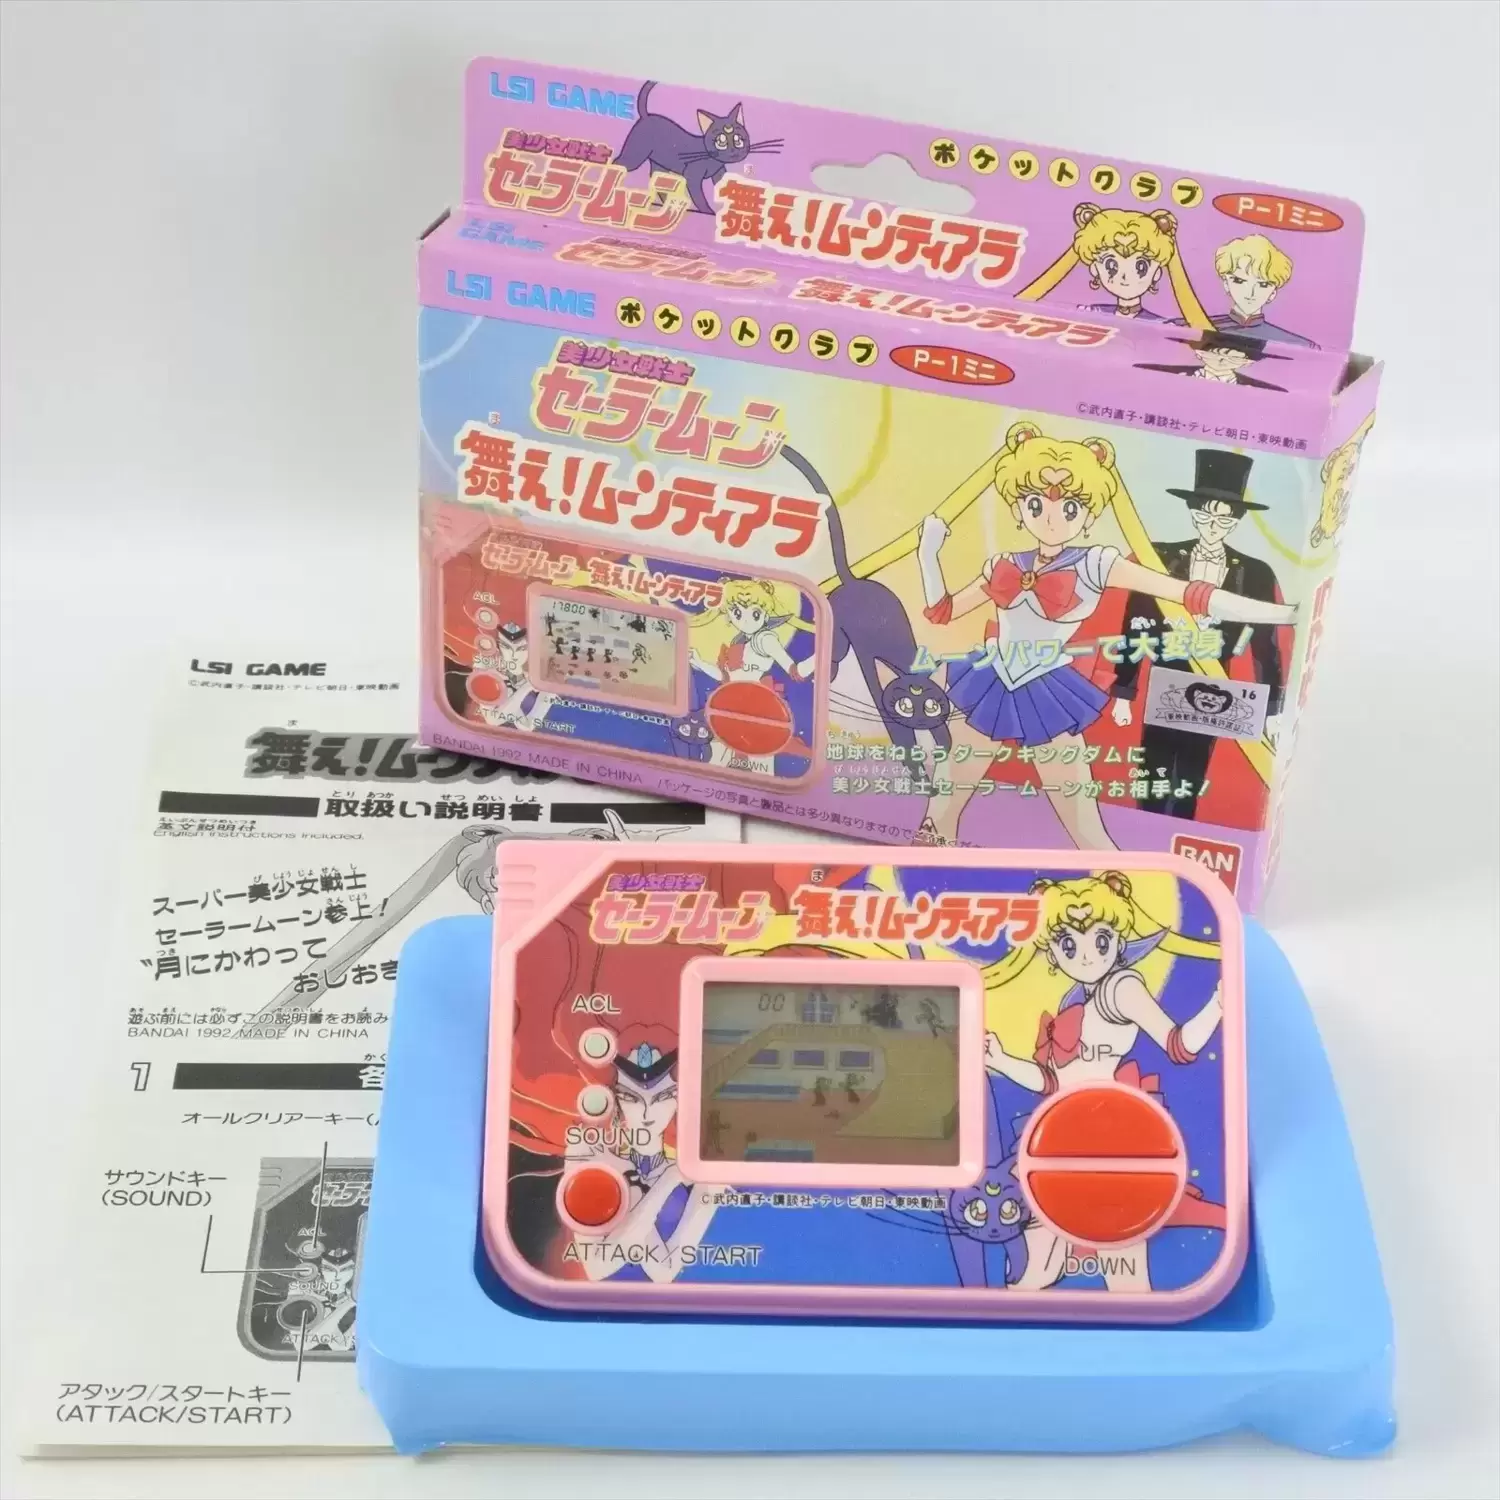 Bandai Electronics - SAILOR MOON Mae Moon Tiara LSI Game